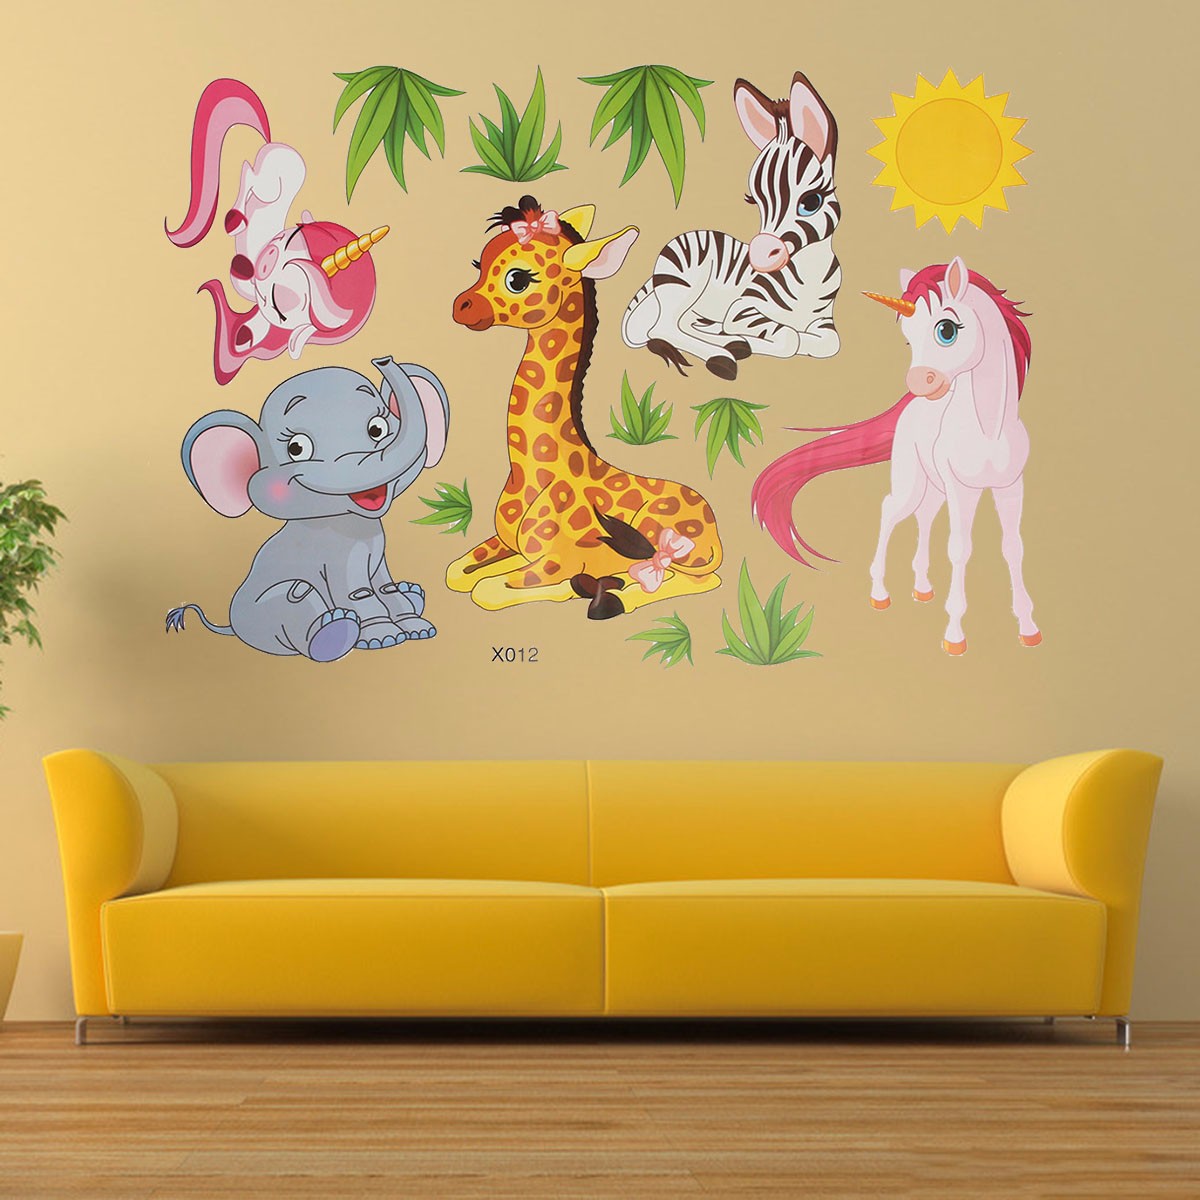 Cartoon-Animal-Elephant-Giraffes-Grass-Bedroom-Removable-Wall-Sticker-Home-Decor-1023584